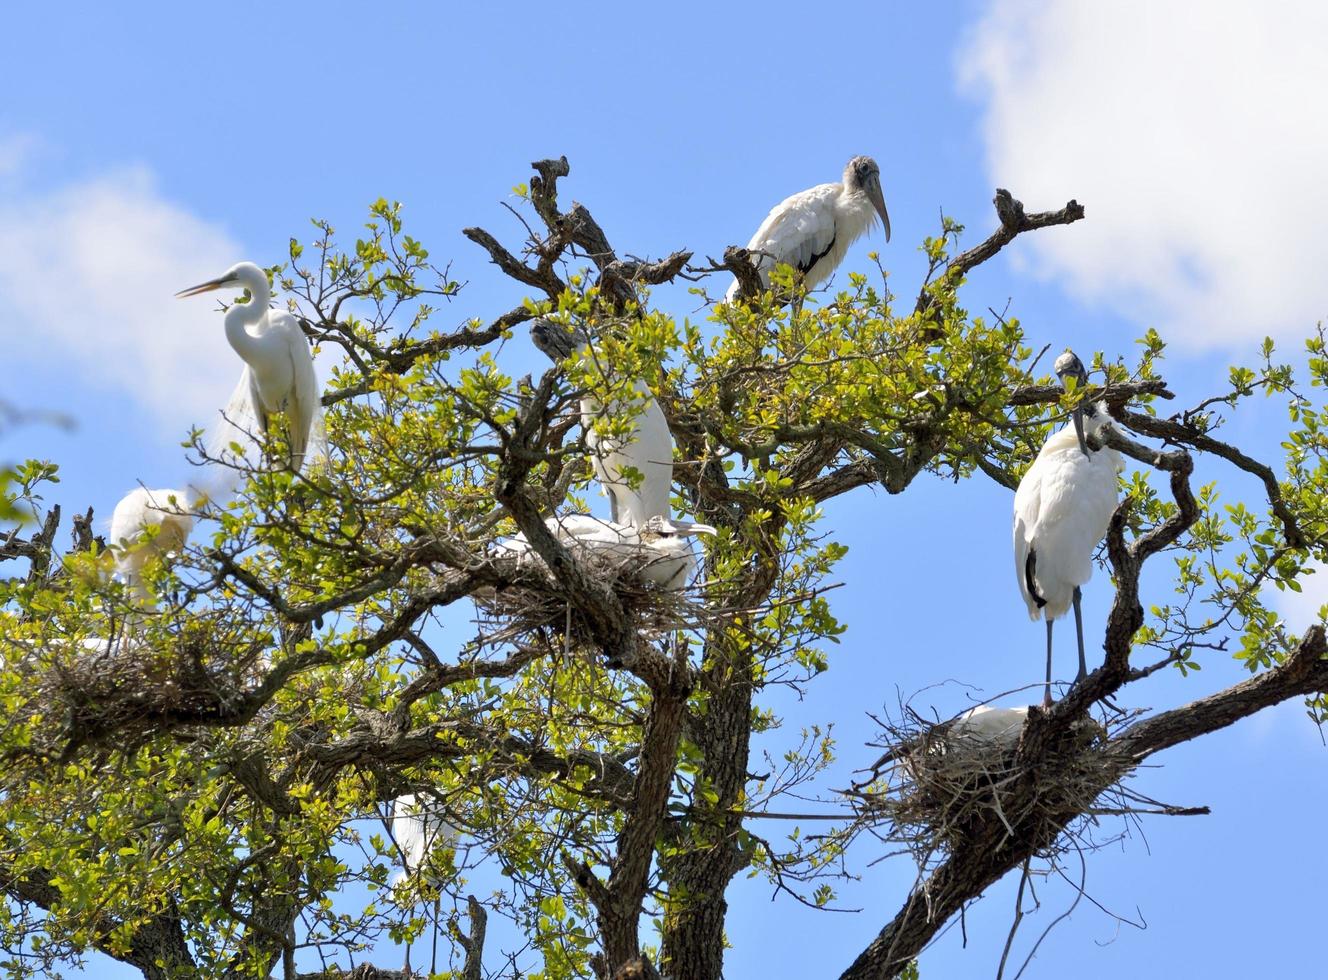 Wood storks and herons photo